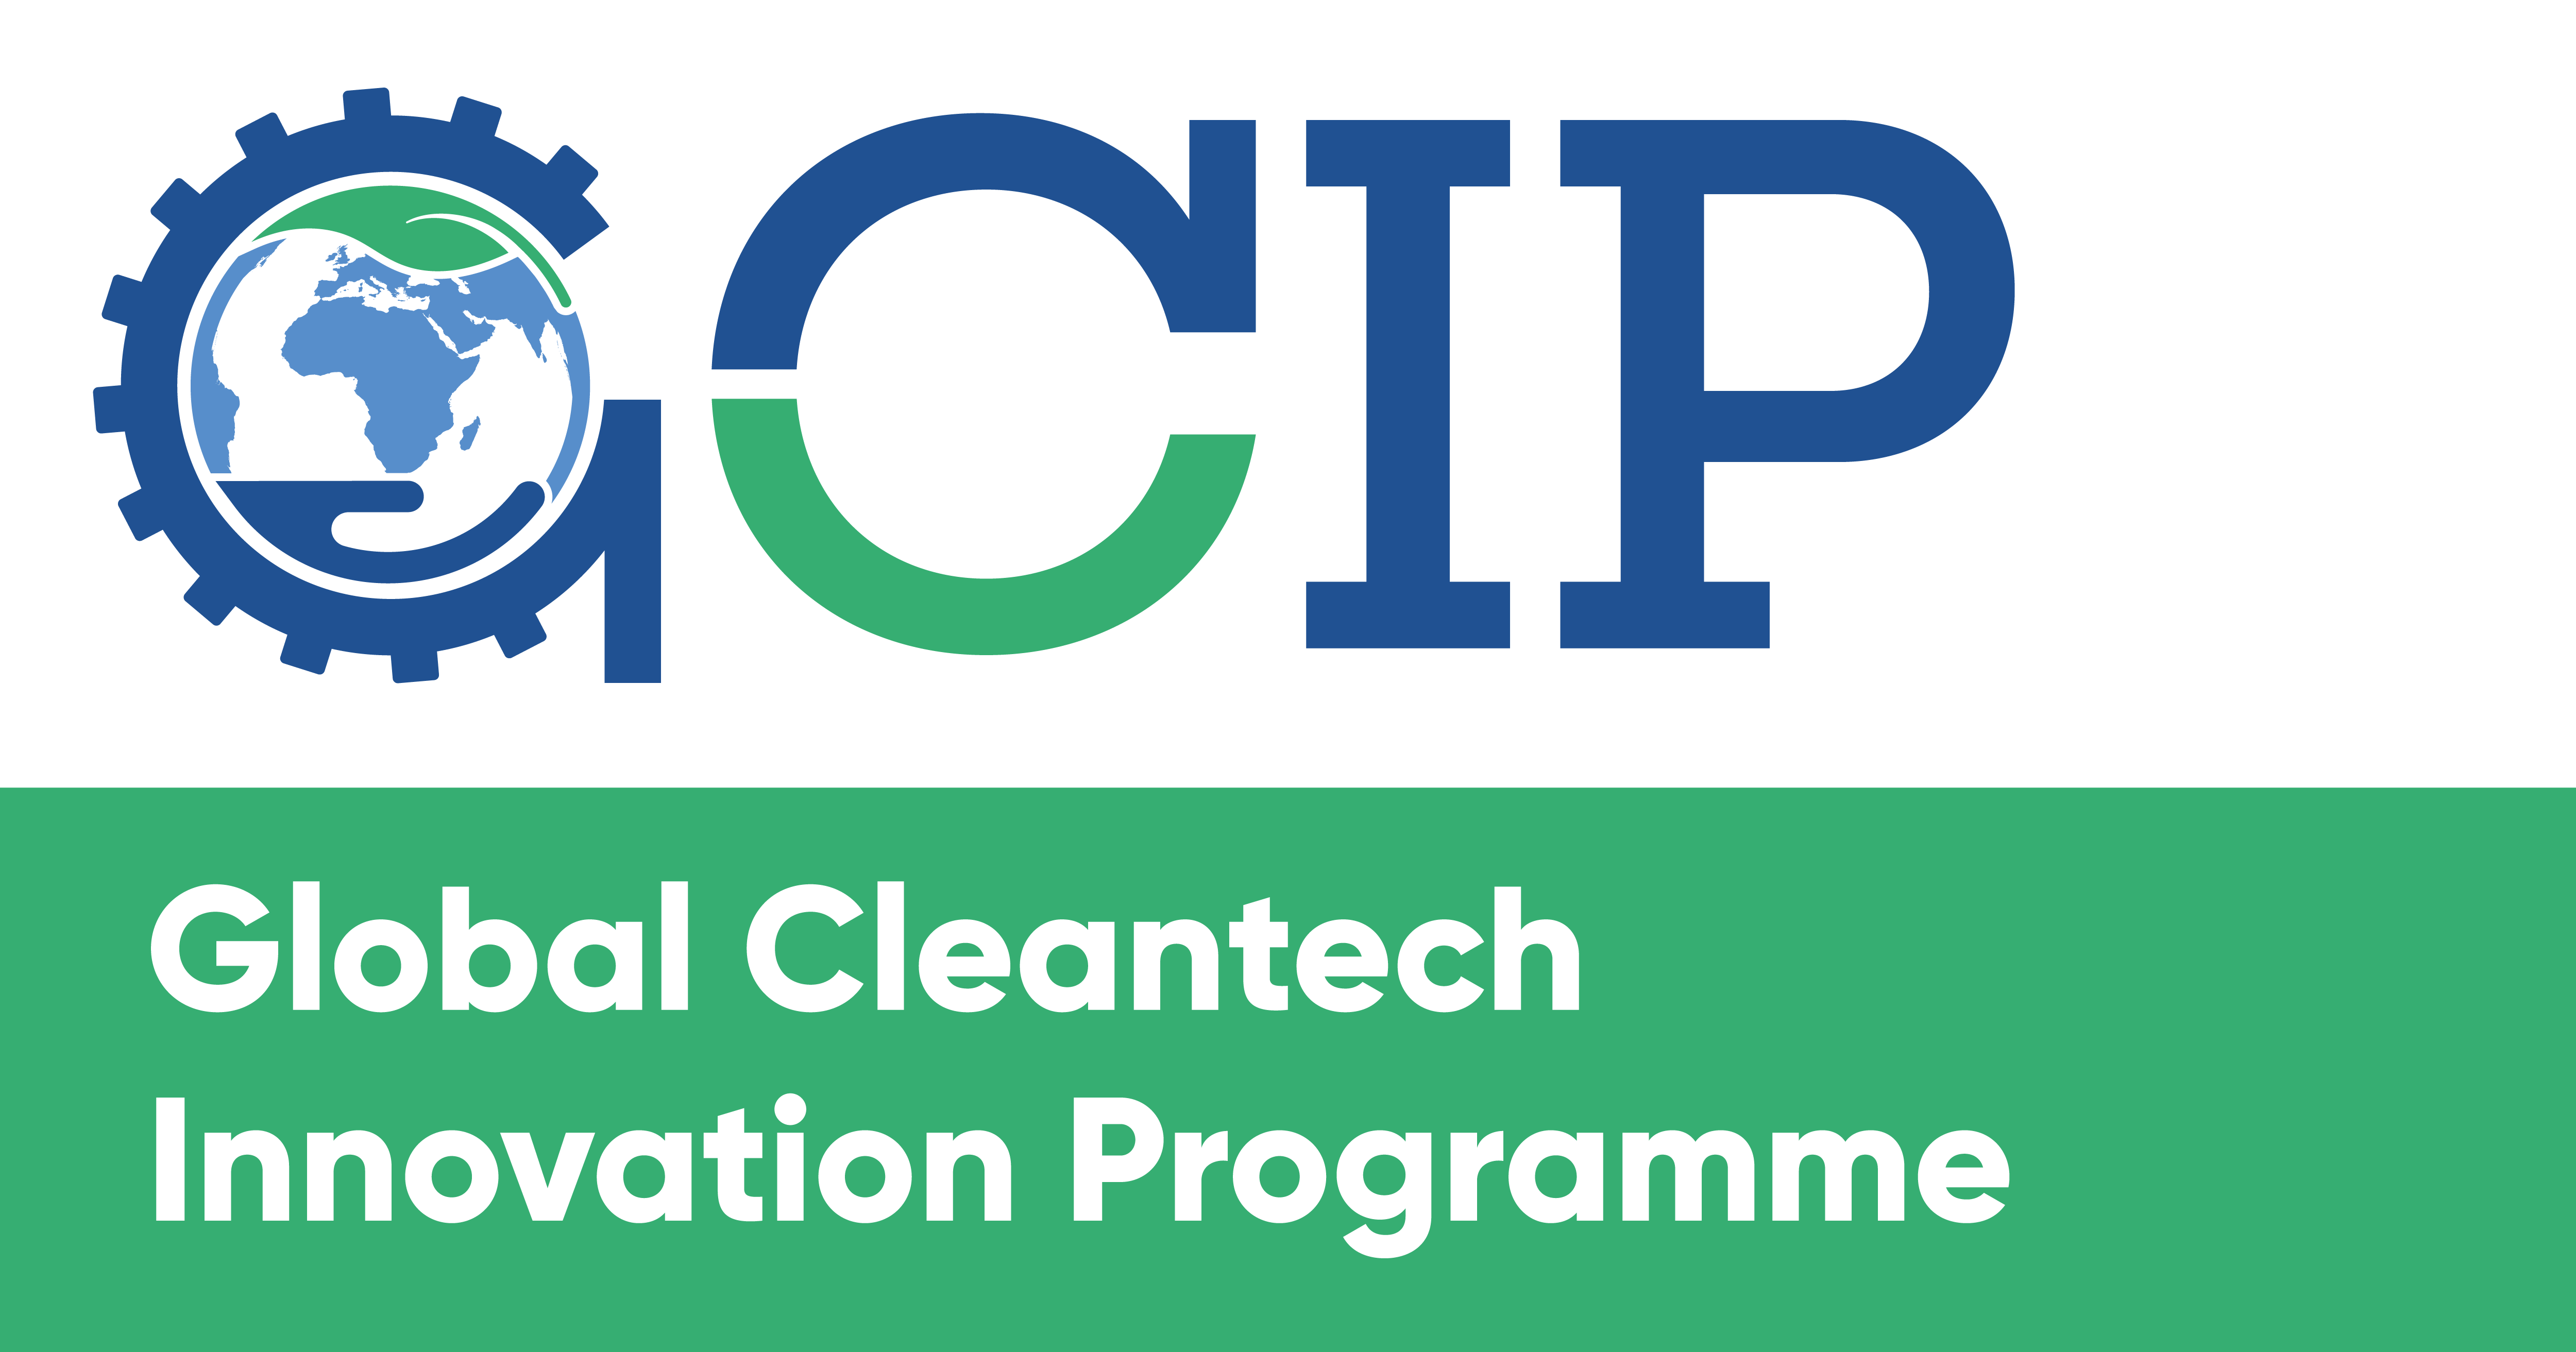 GCIP Nigeria celebrates Cleantech Innovators